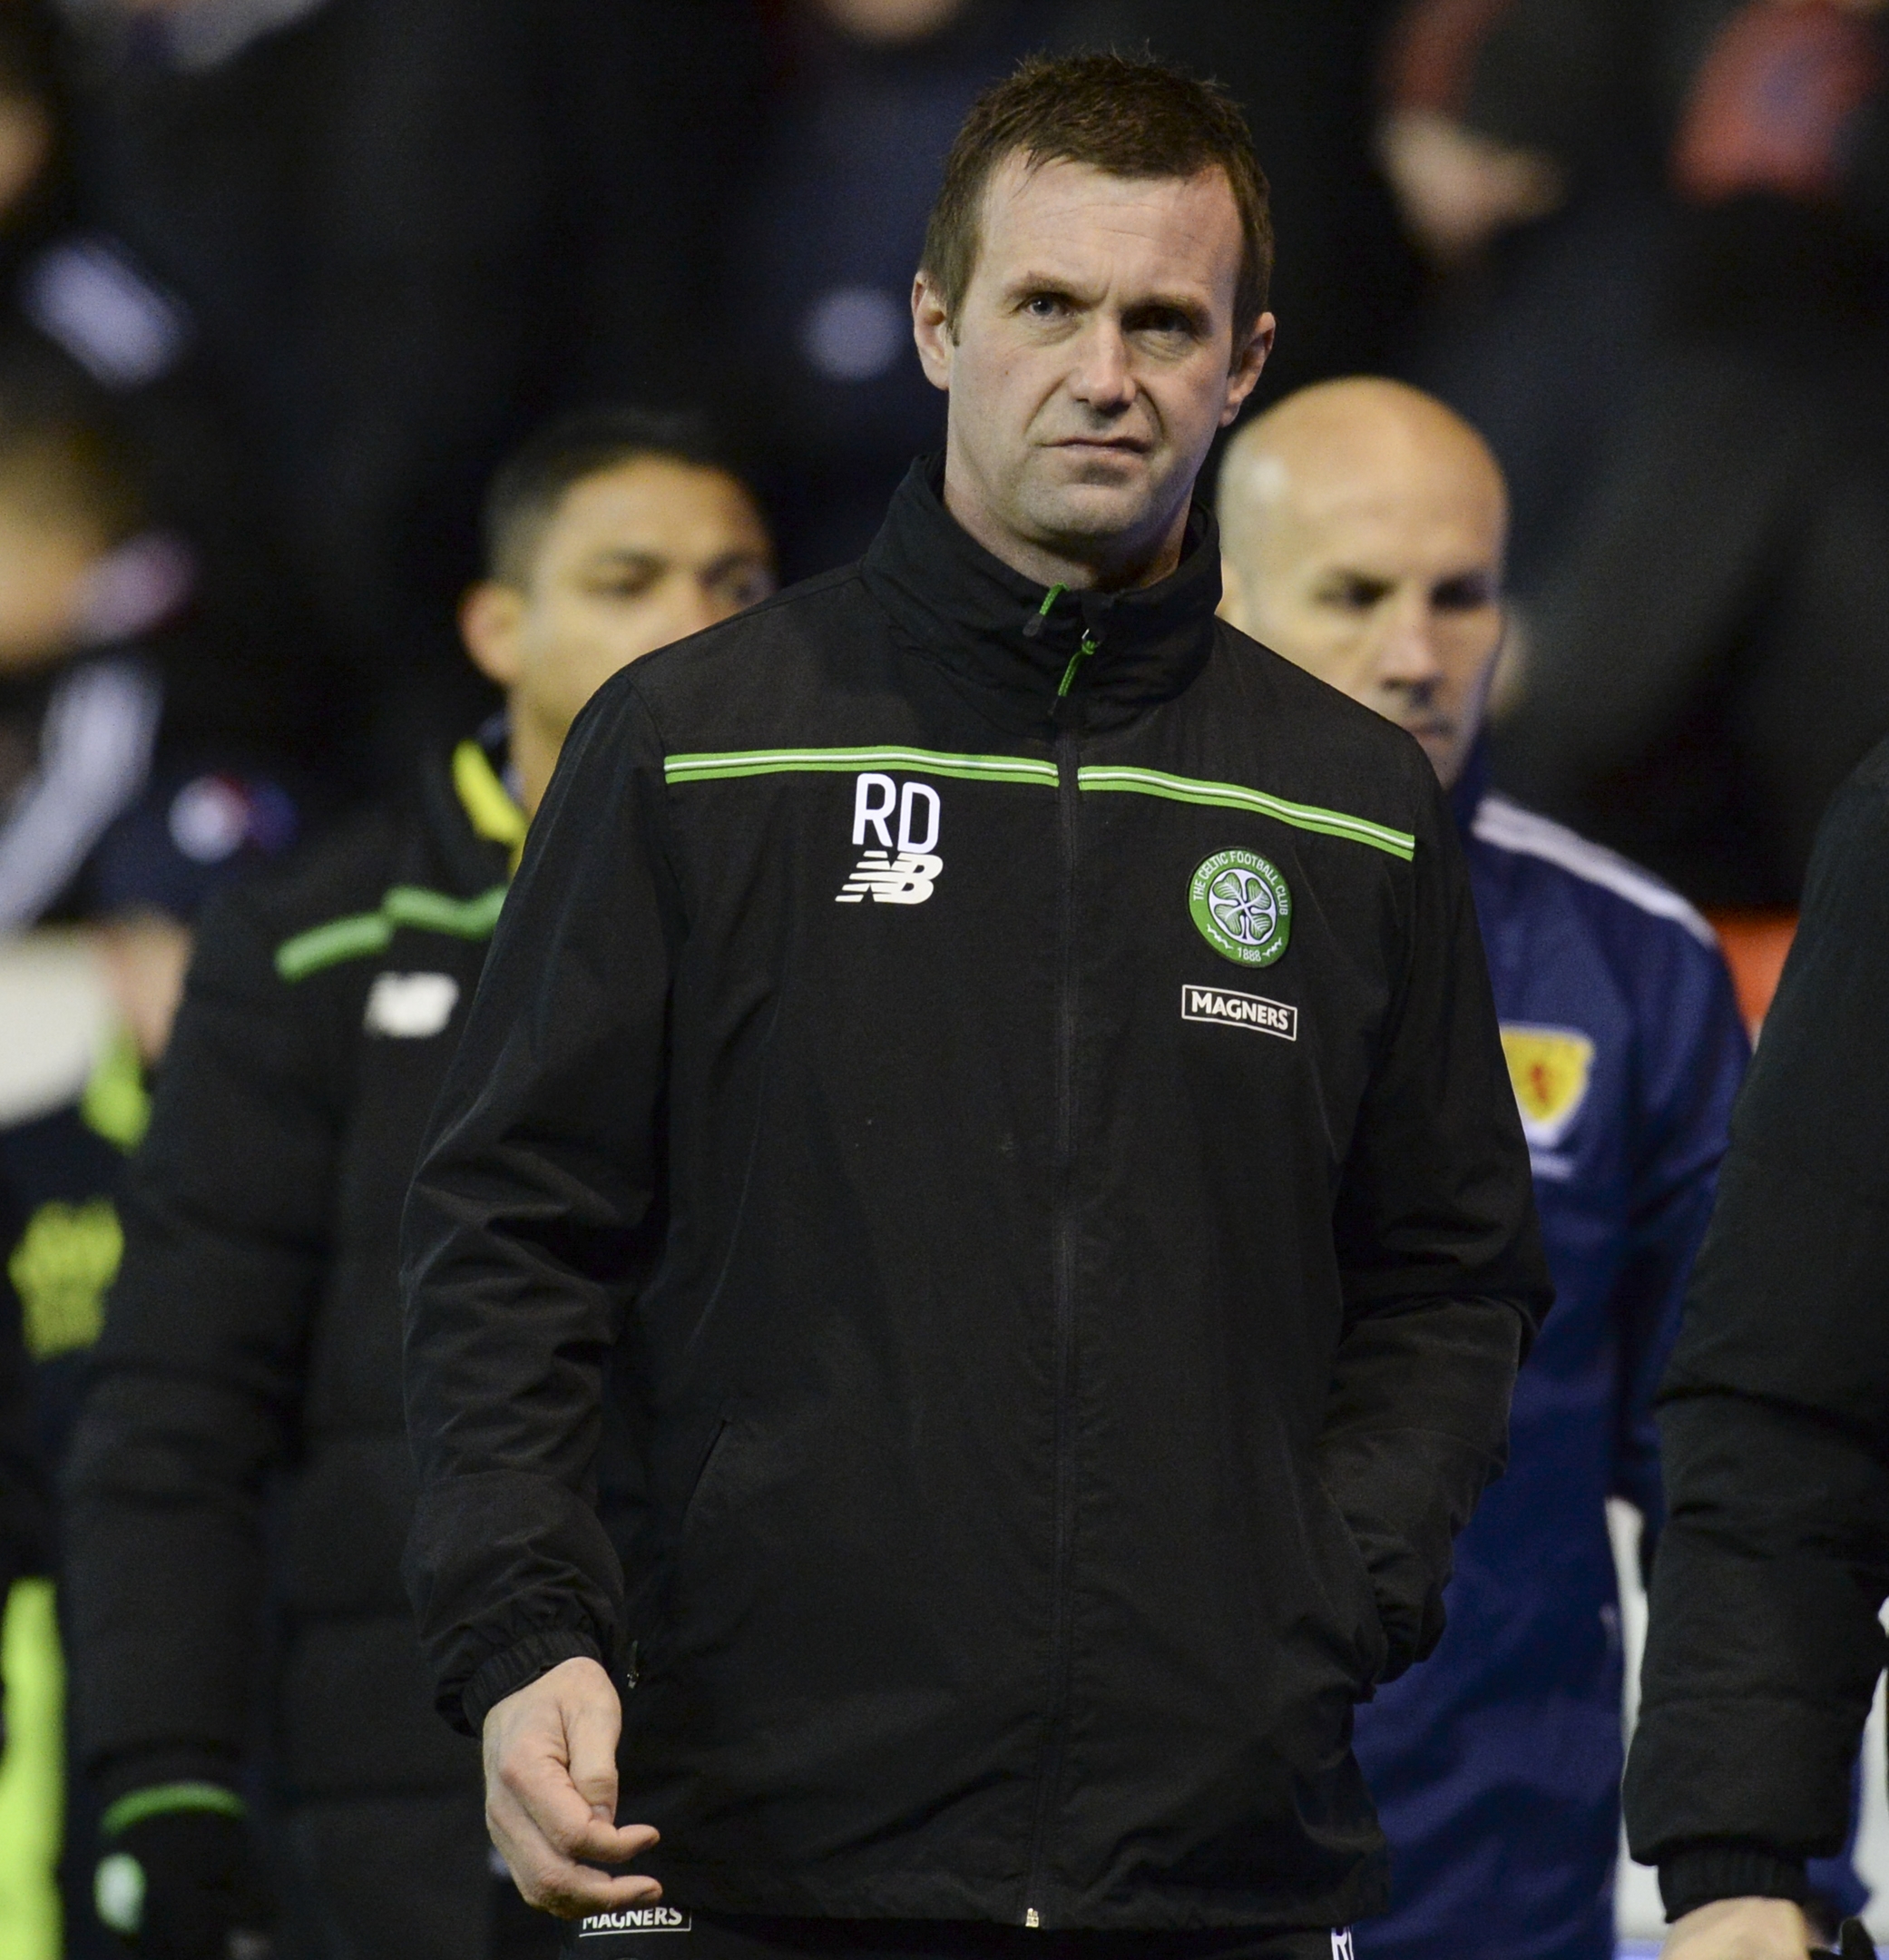 Celtic manager Ronny Deila was left dejected